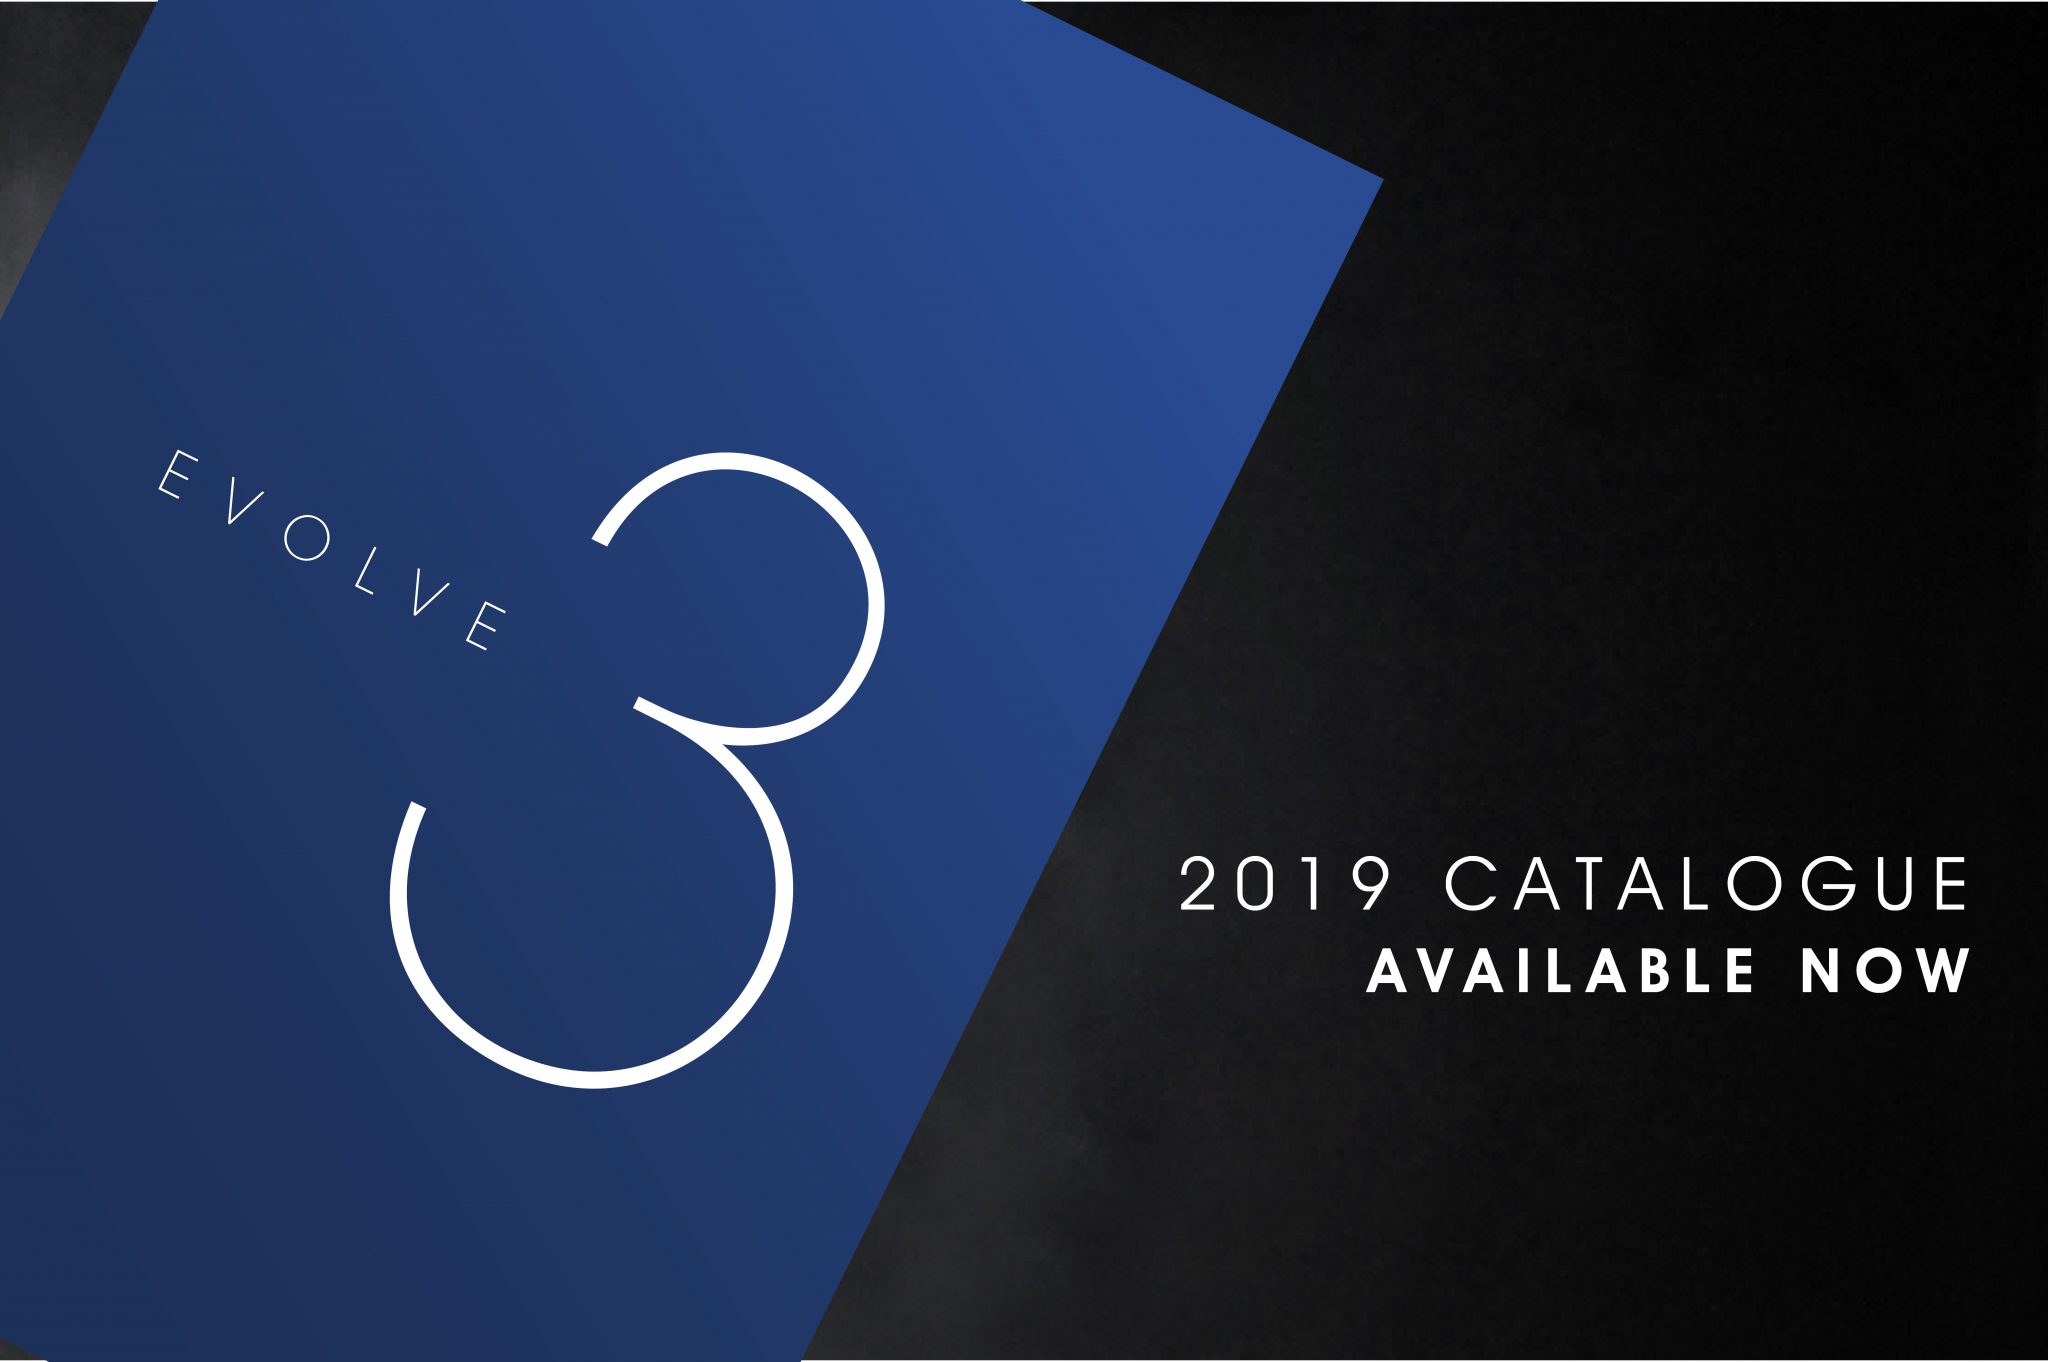 Kosnic’s new Evolve 3 catalogue has landed!